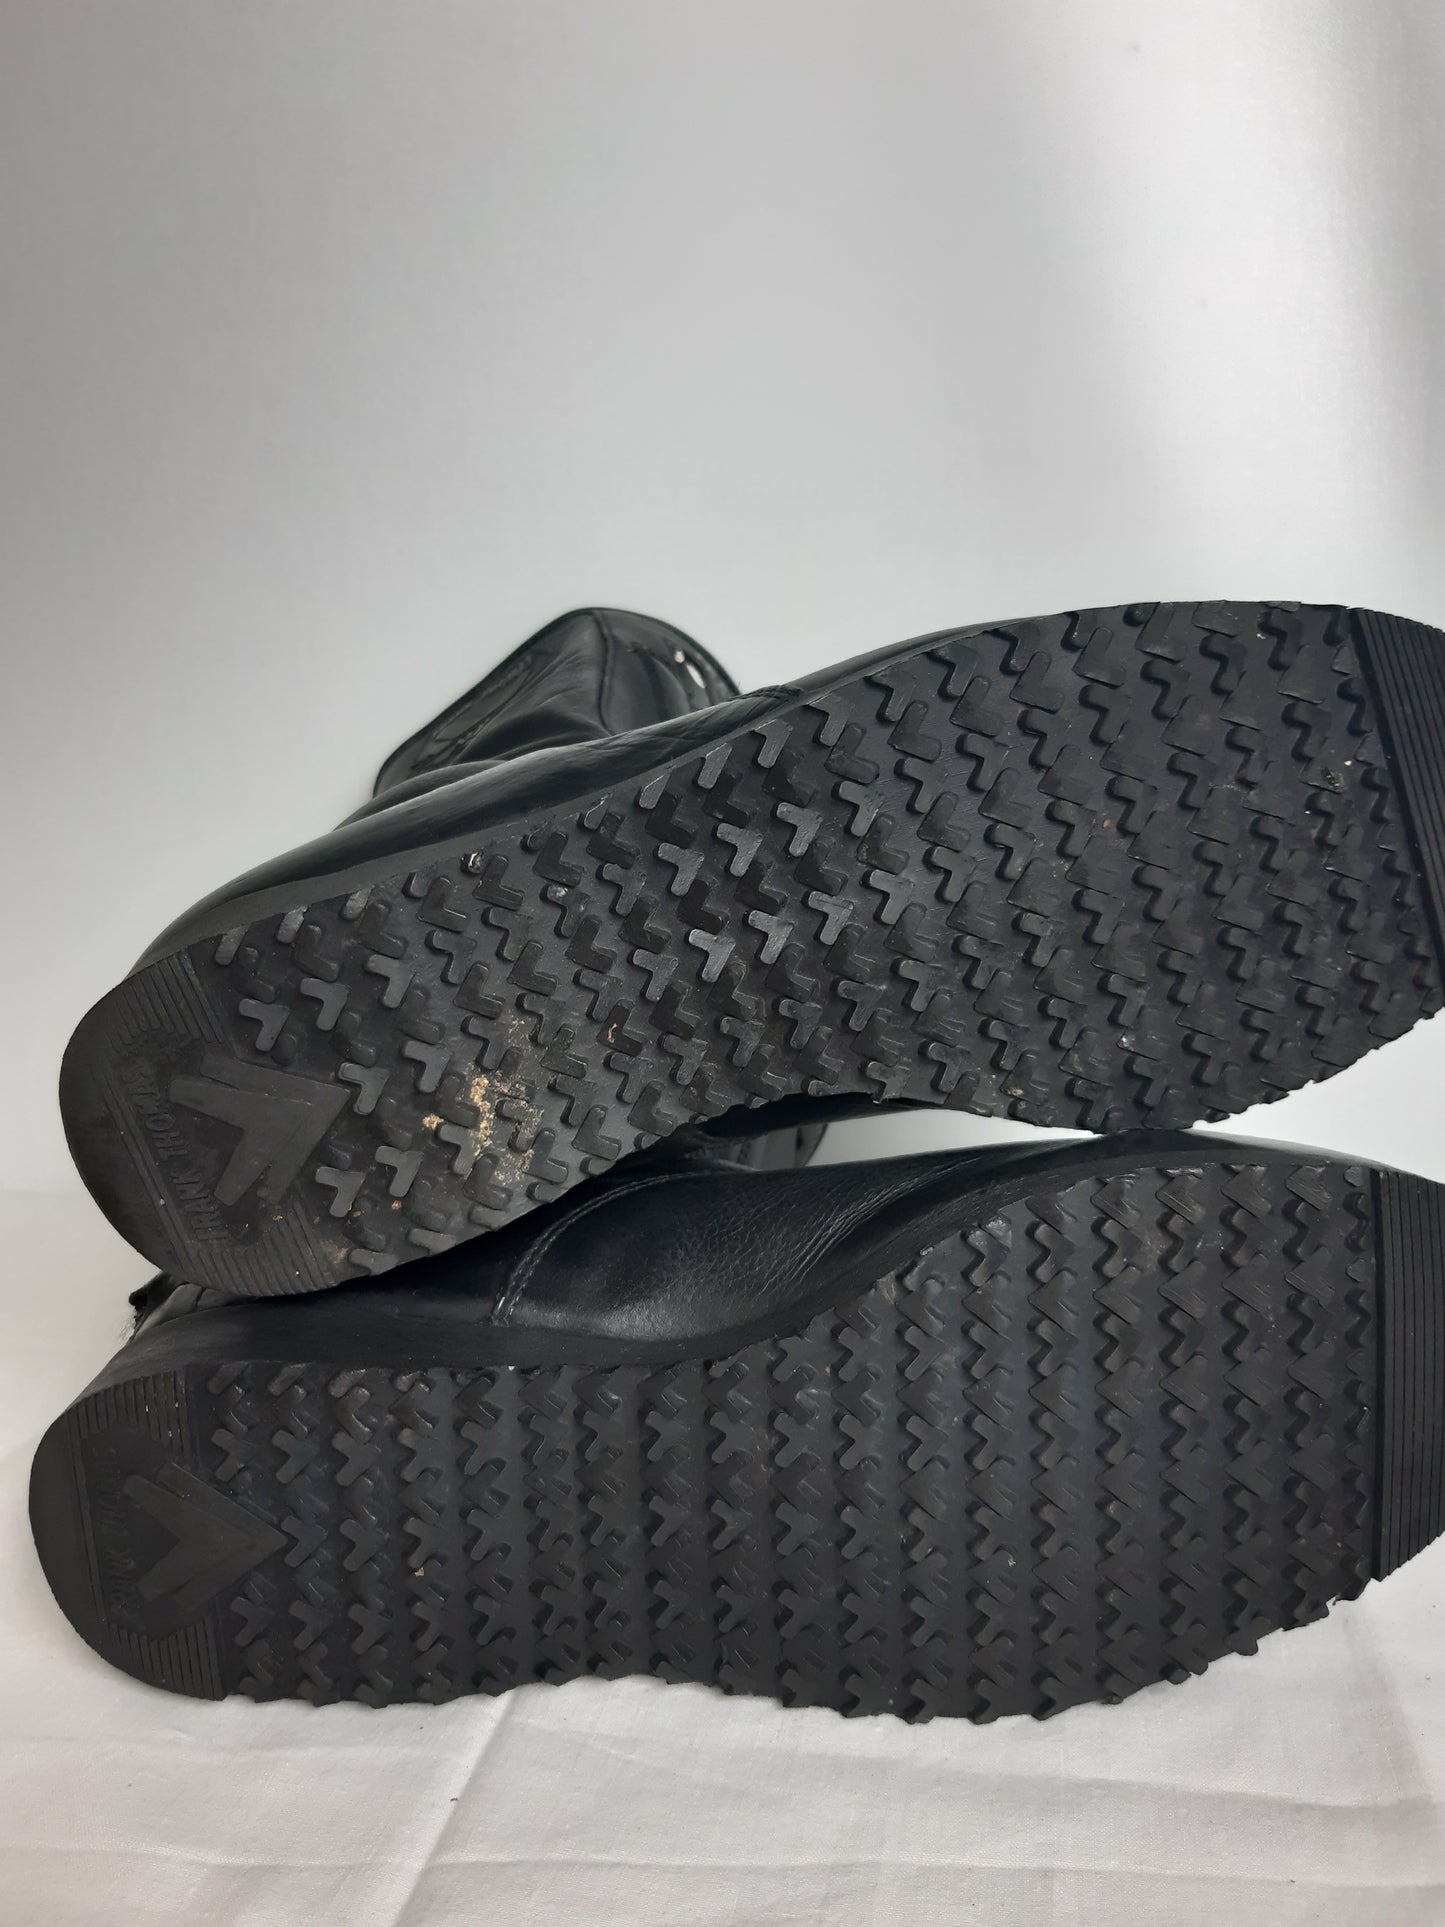 Frank Thomas Black Leather Boots Size 8